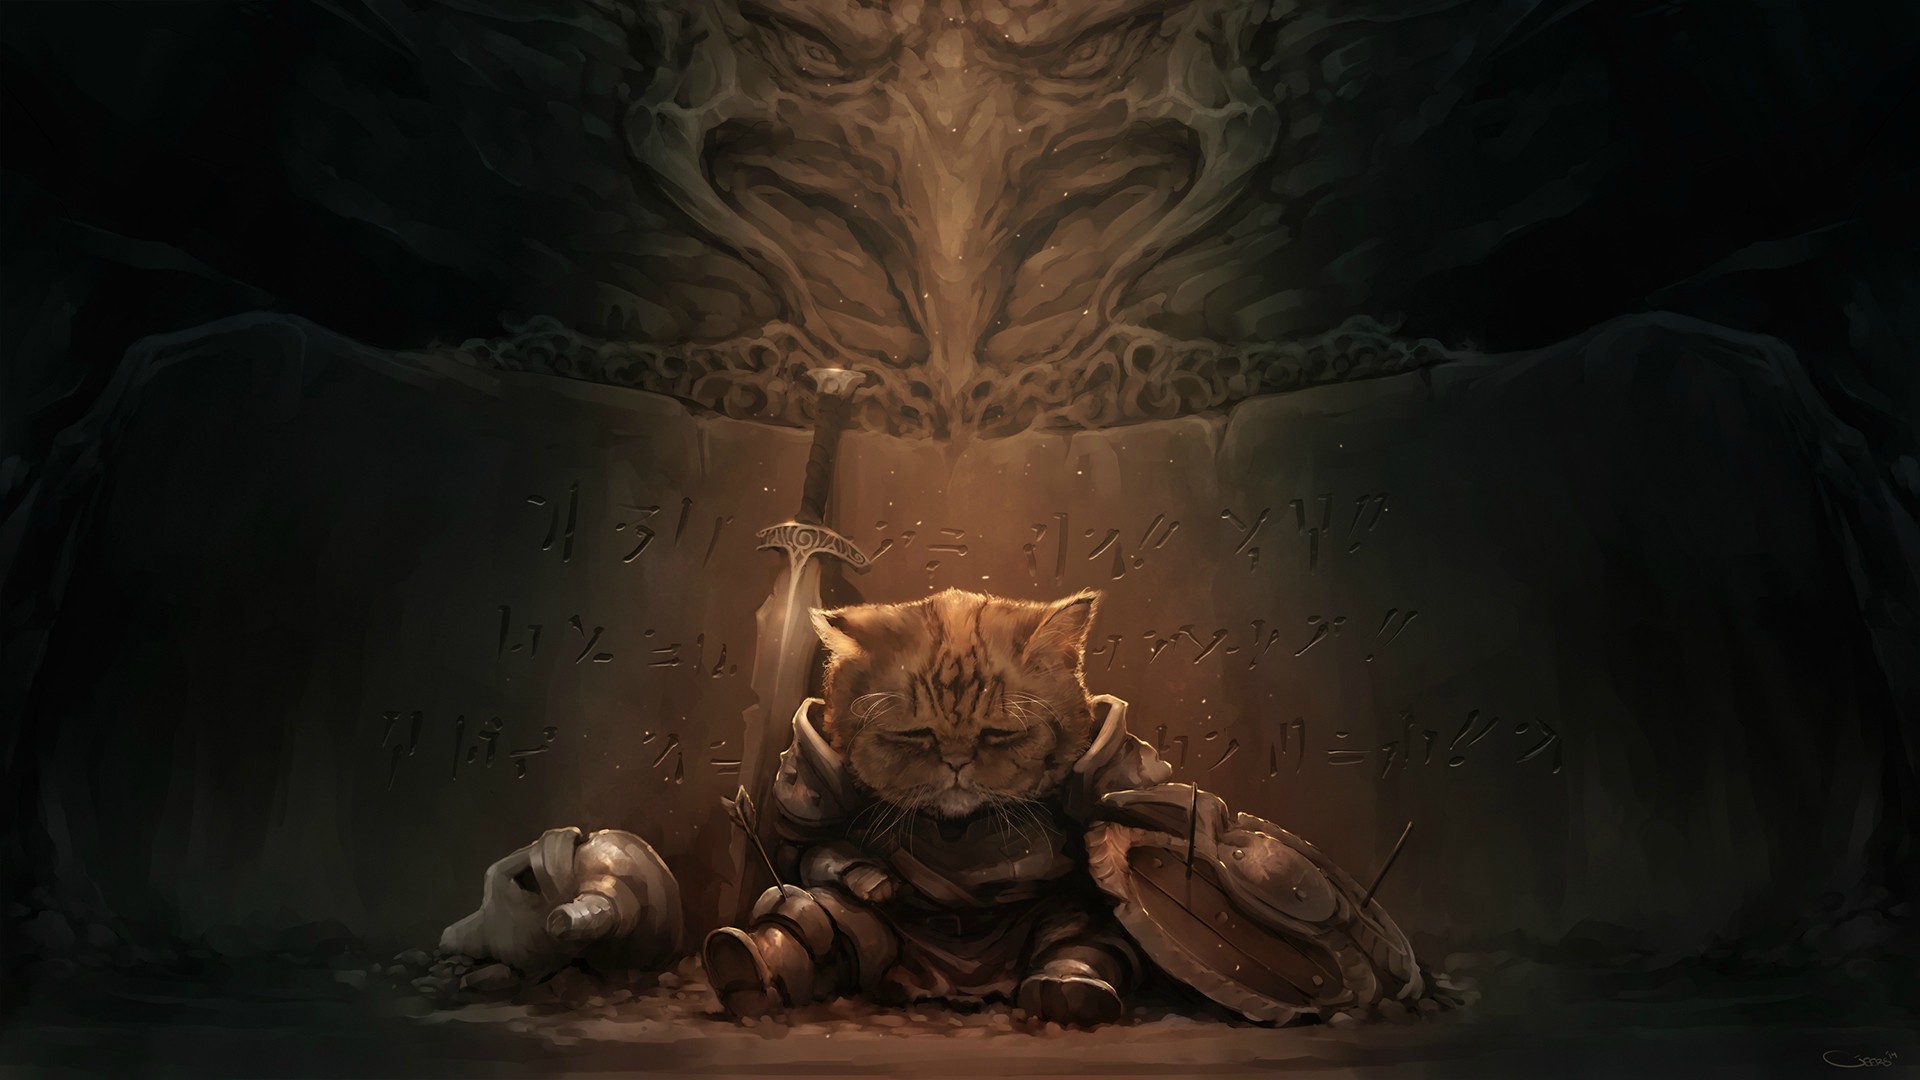 General 1920x1080 The Elder Scrolls V: Skyrim cats video games RPG PC gaming fantasy art DeviantArt